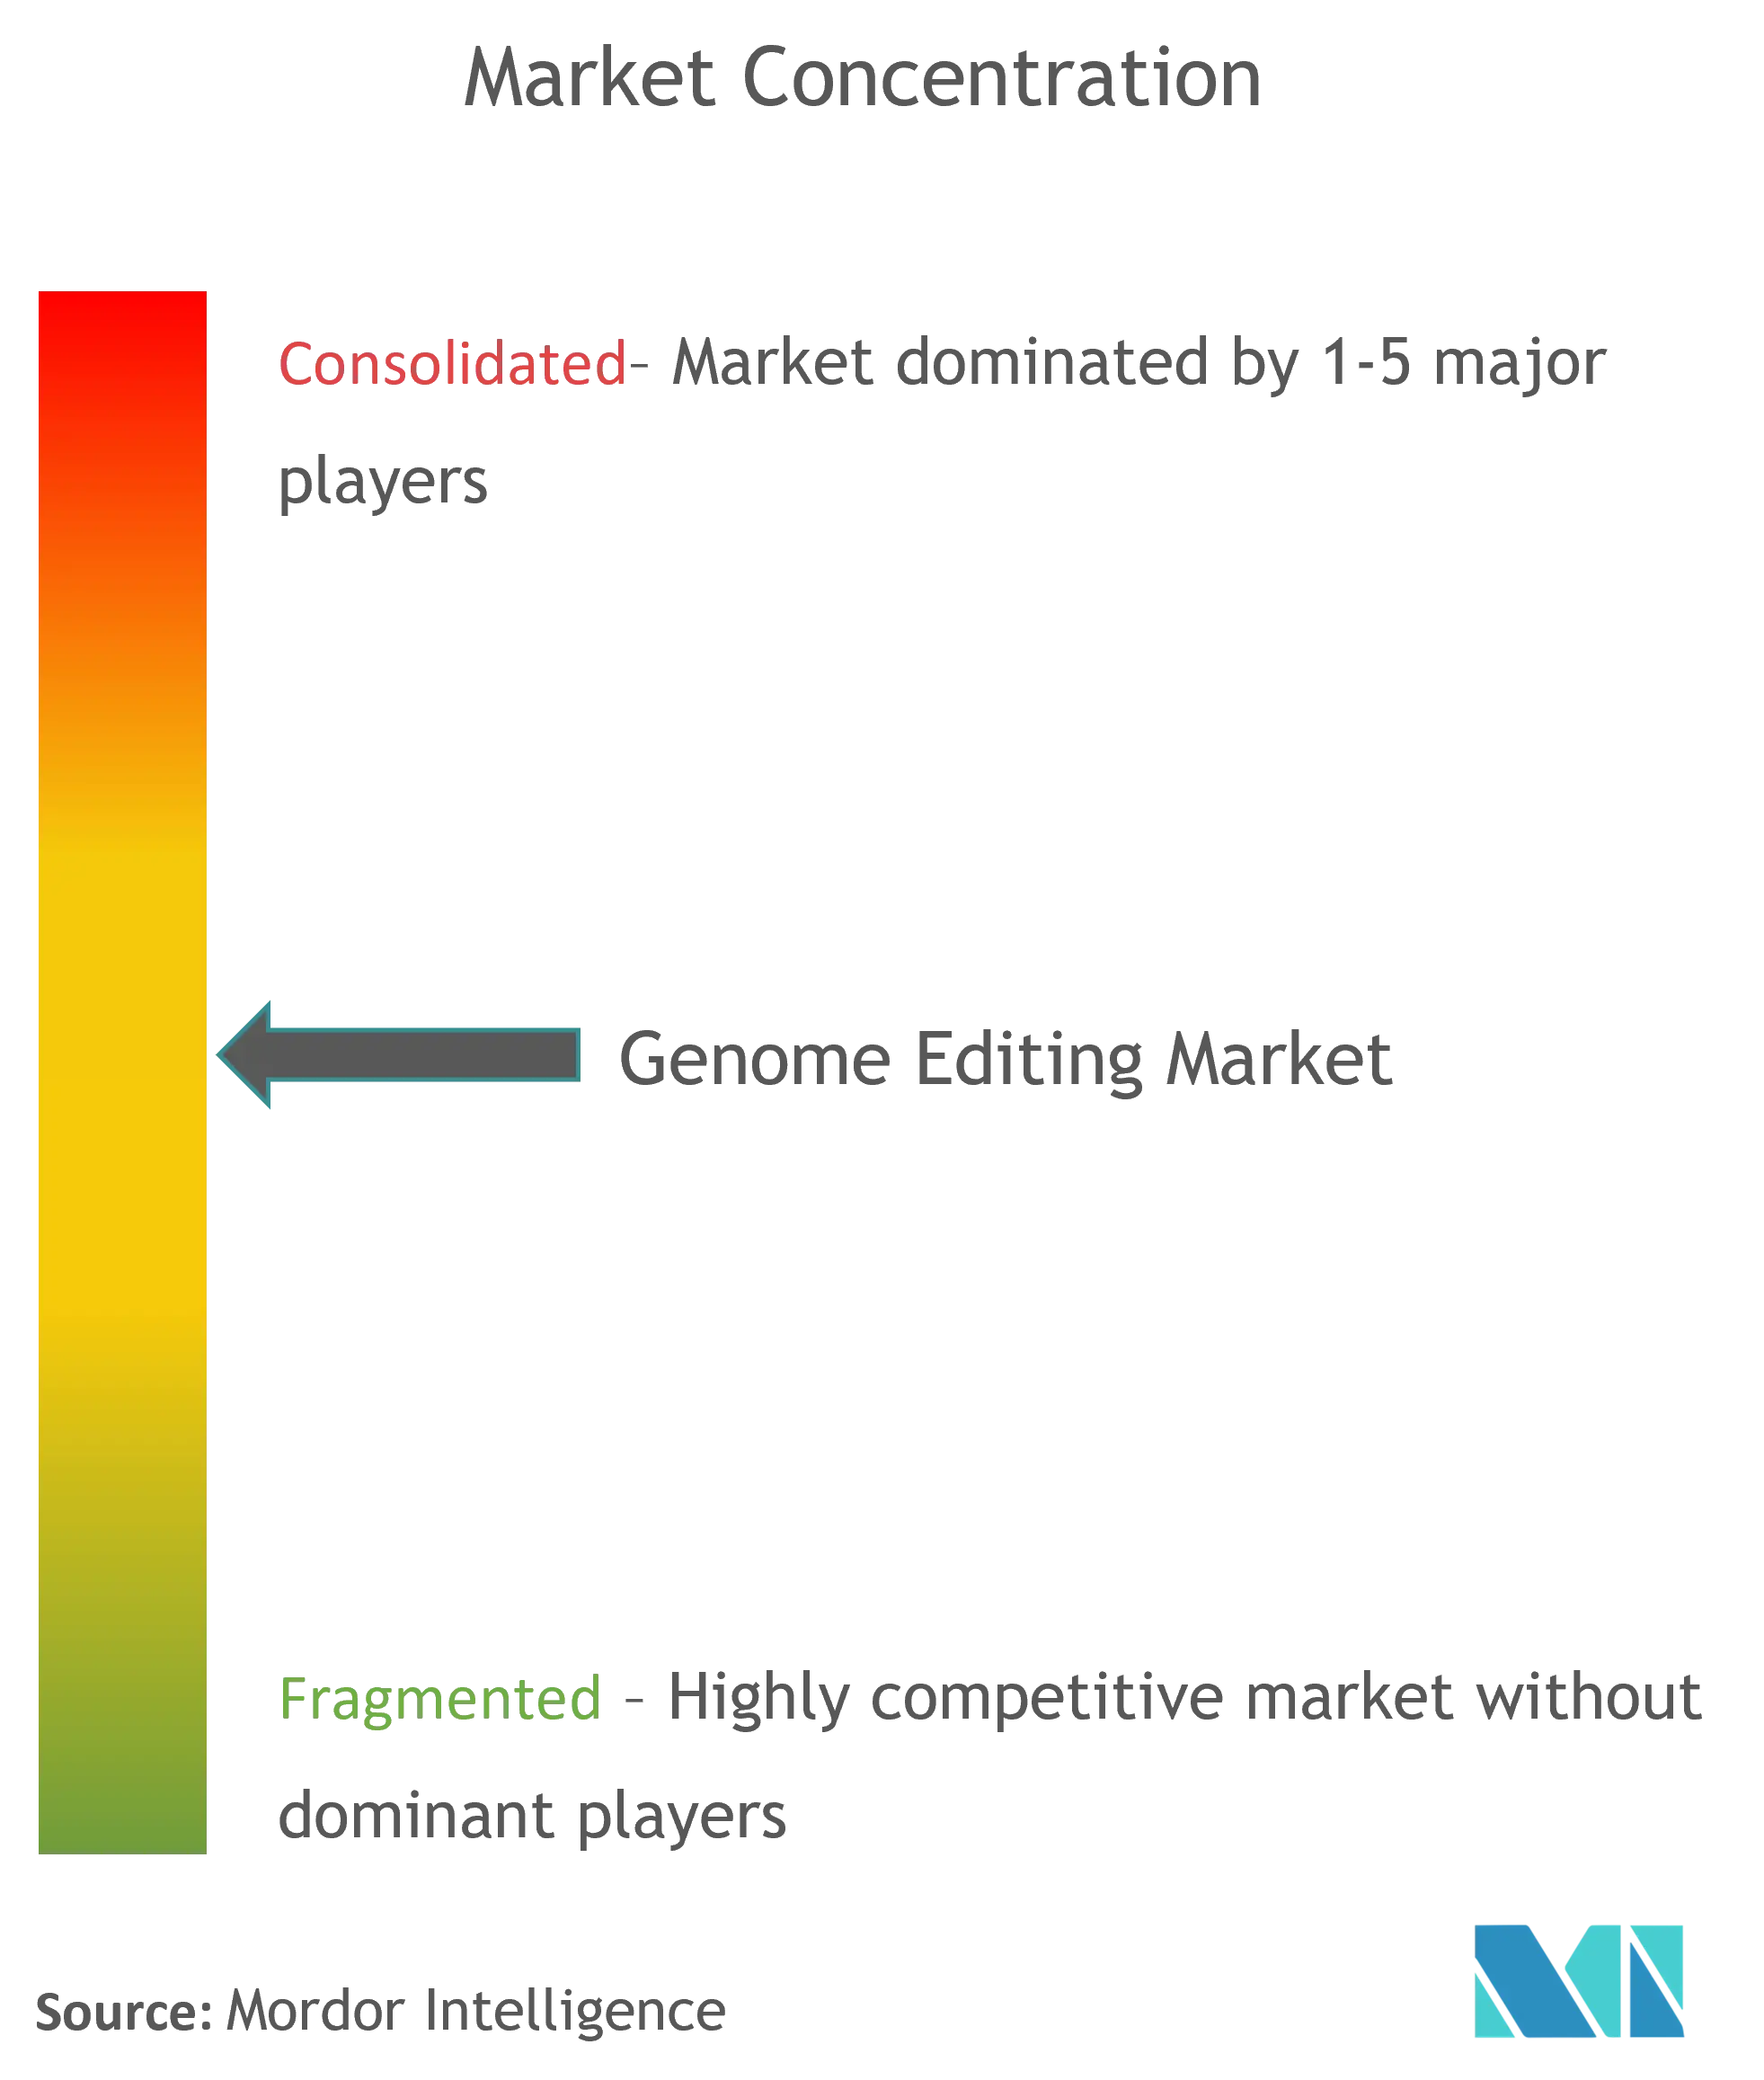 Genome Editing Market Concentration